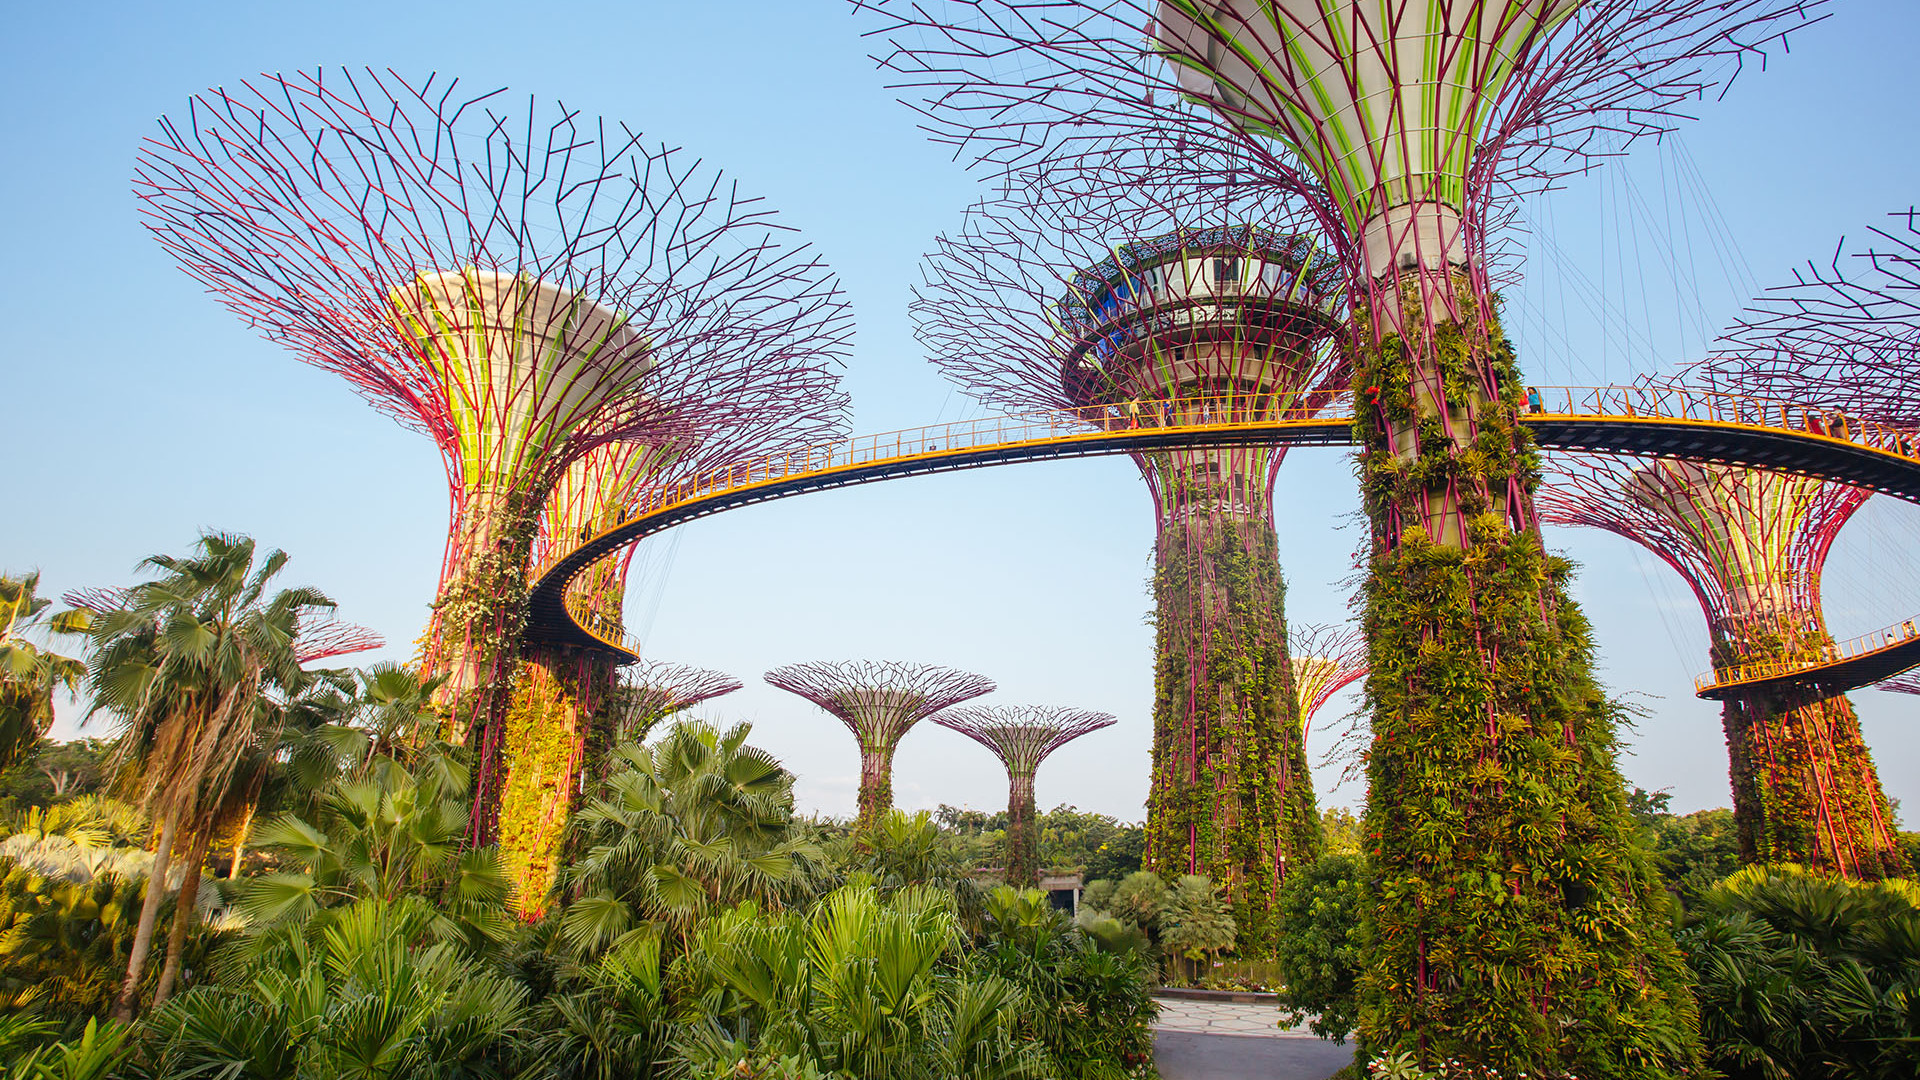 gardens by the bay in singapore 2021 08 29 03 40 32 utc